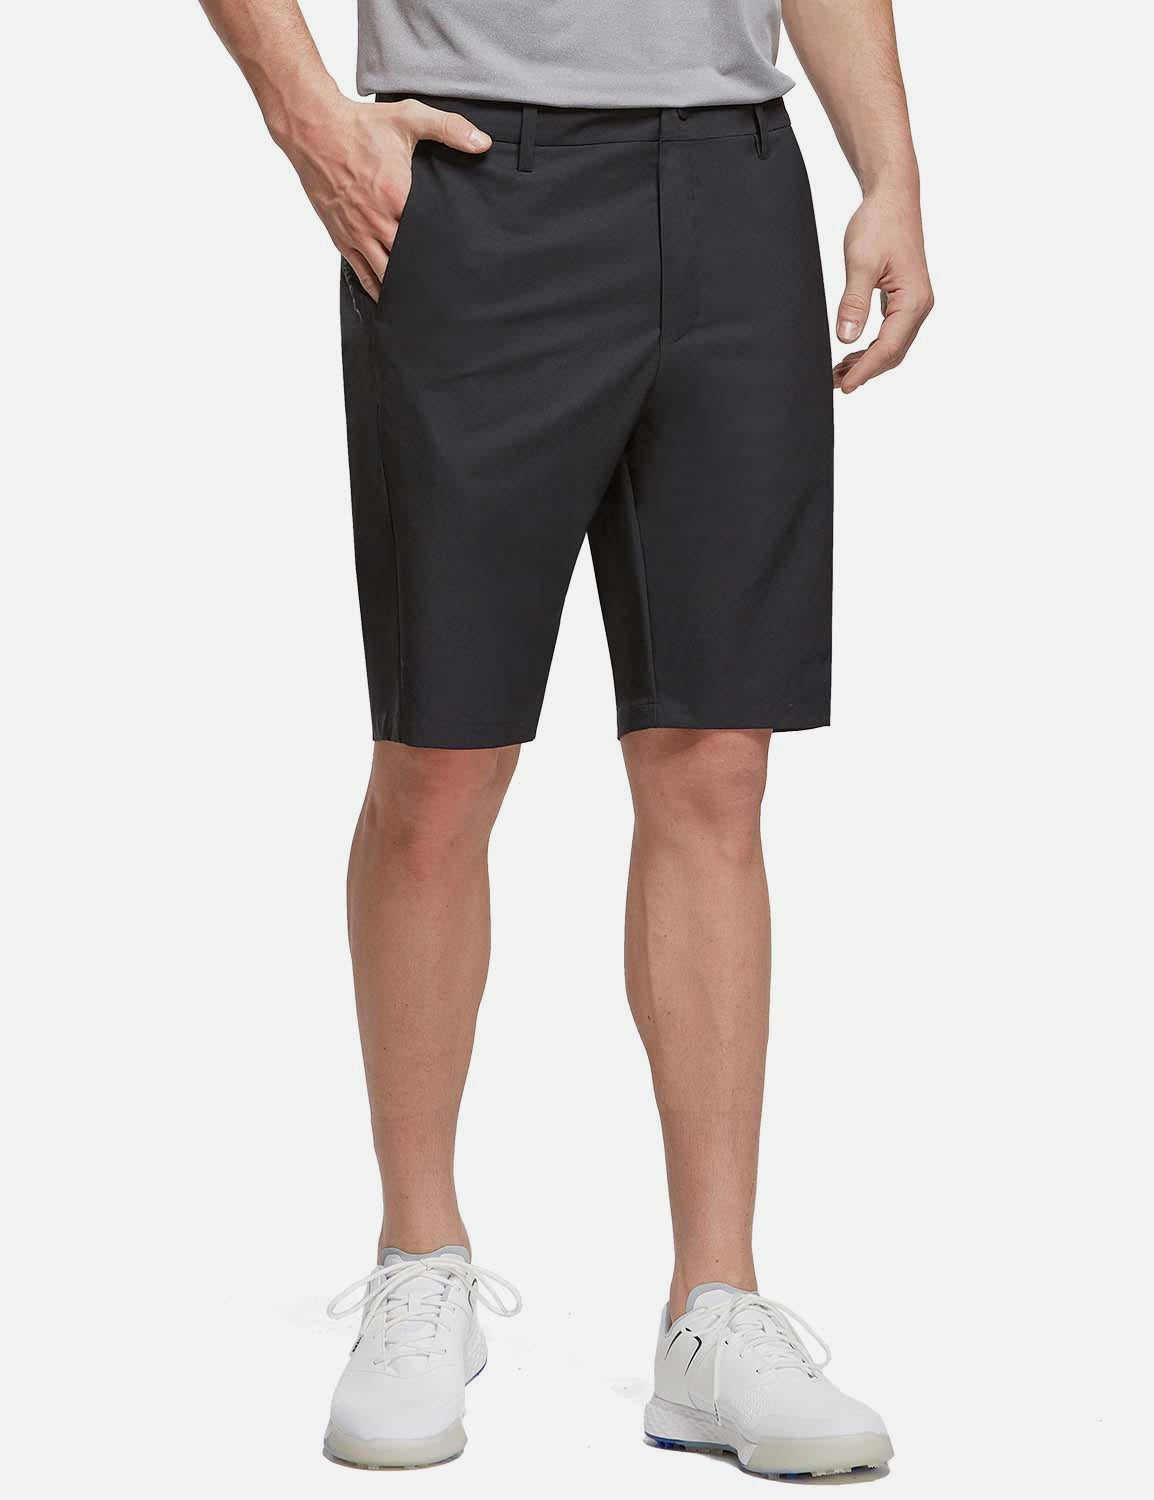 Baleaf Men's 10' UPF 50+ Lightweight Golf Shorts w Zipper Pockets cga005 Black Side